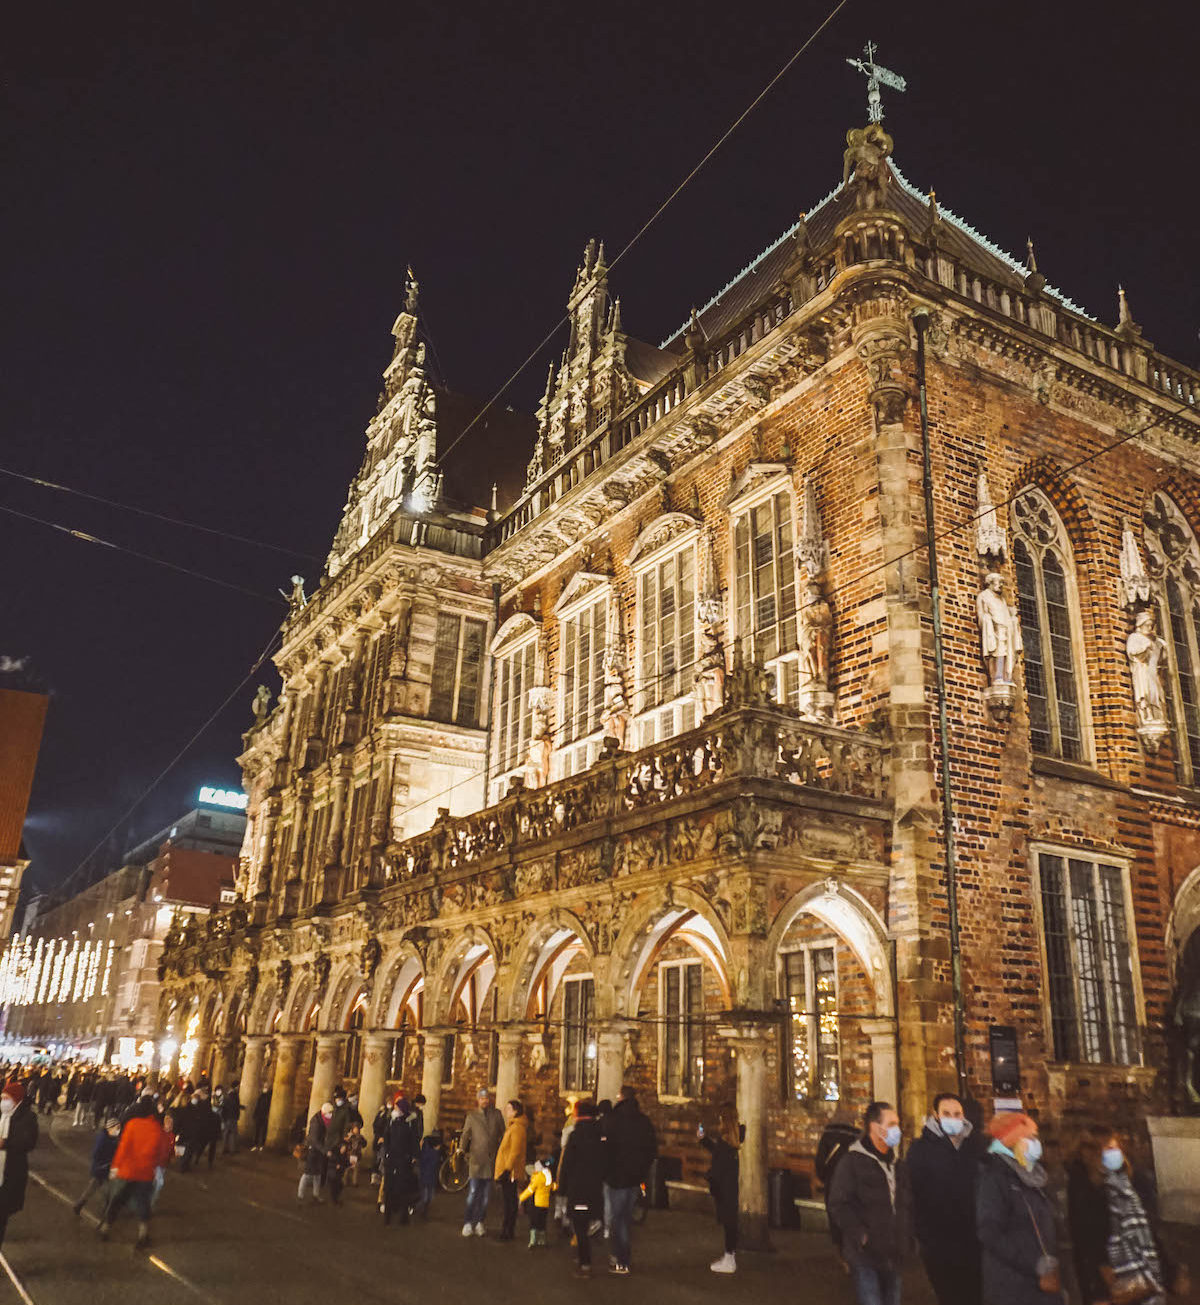 Bremen's Town Hall, illuminated at night